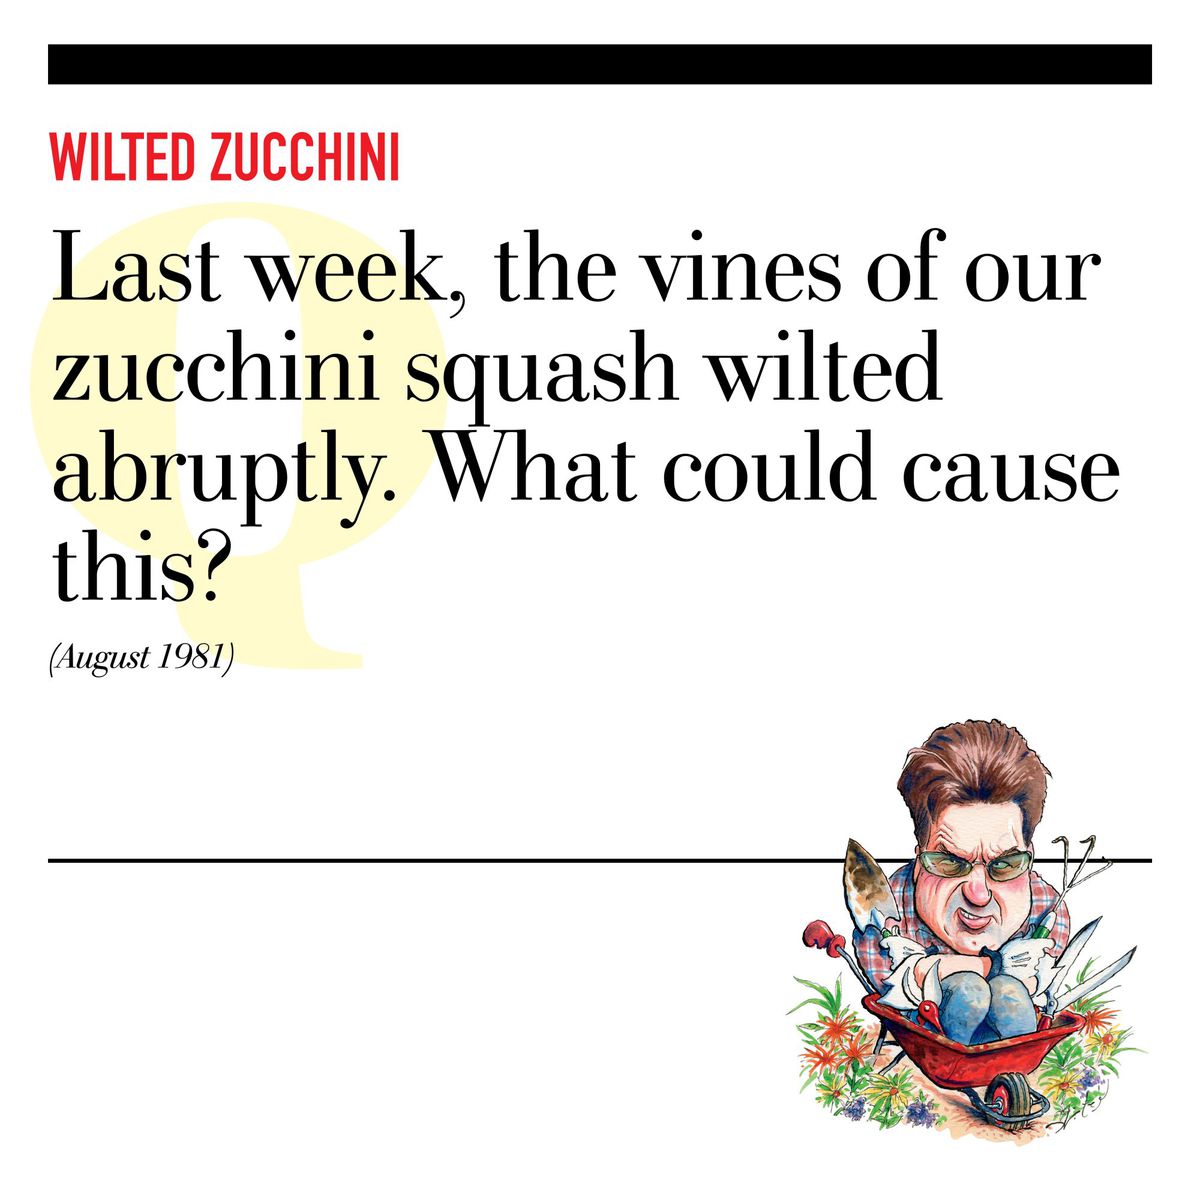 Wilted Zucchini